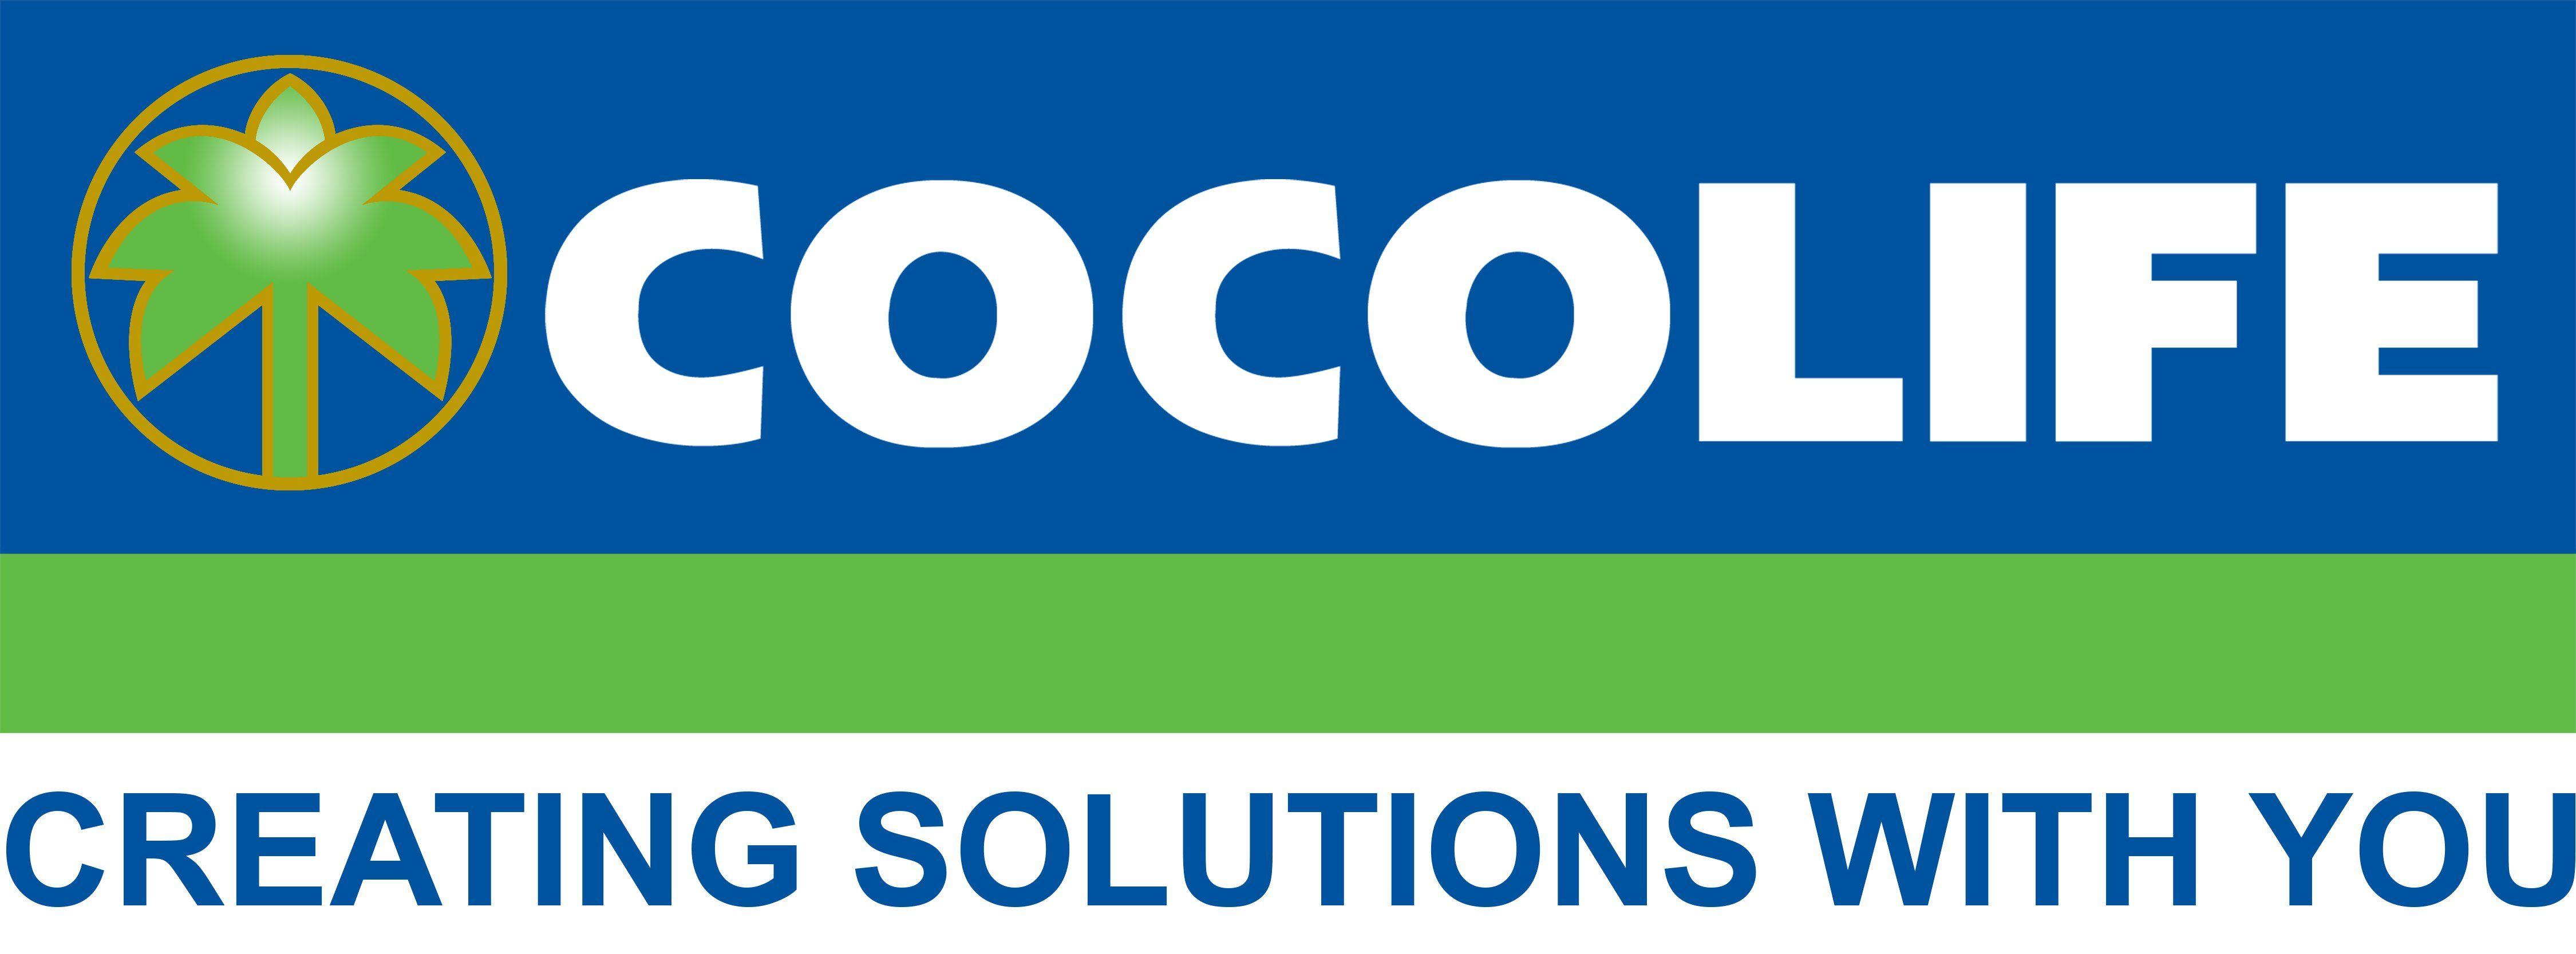 Cocolife Logo - COCOLIFE Careers, Job Hiring & Openings